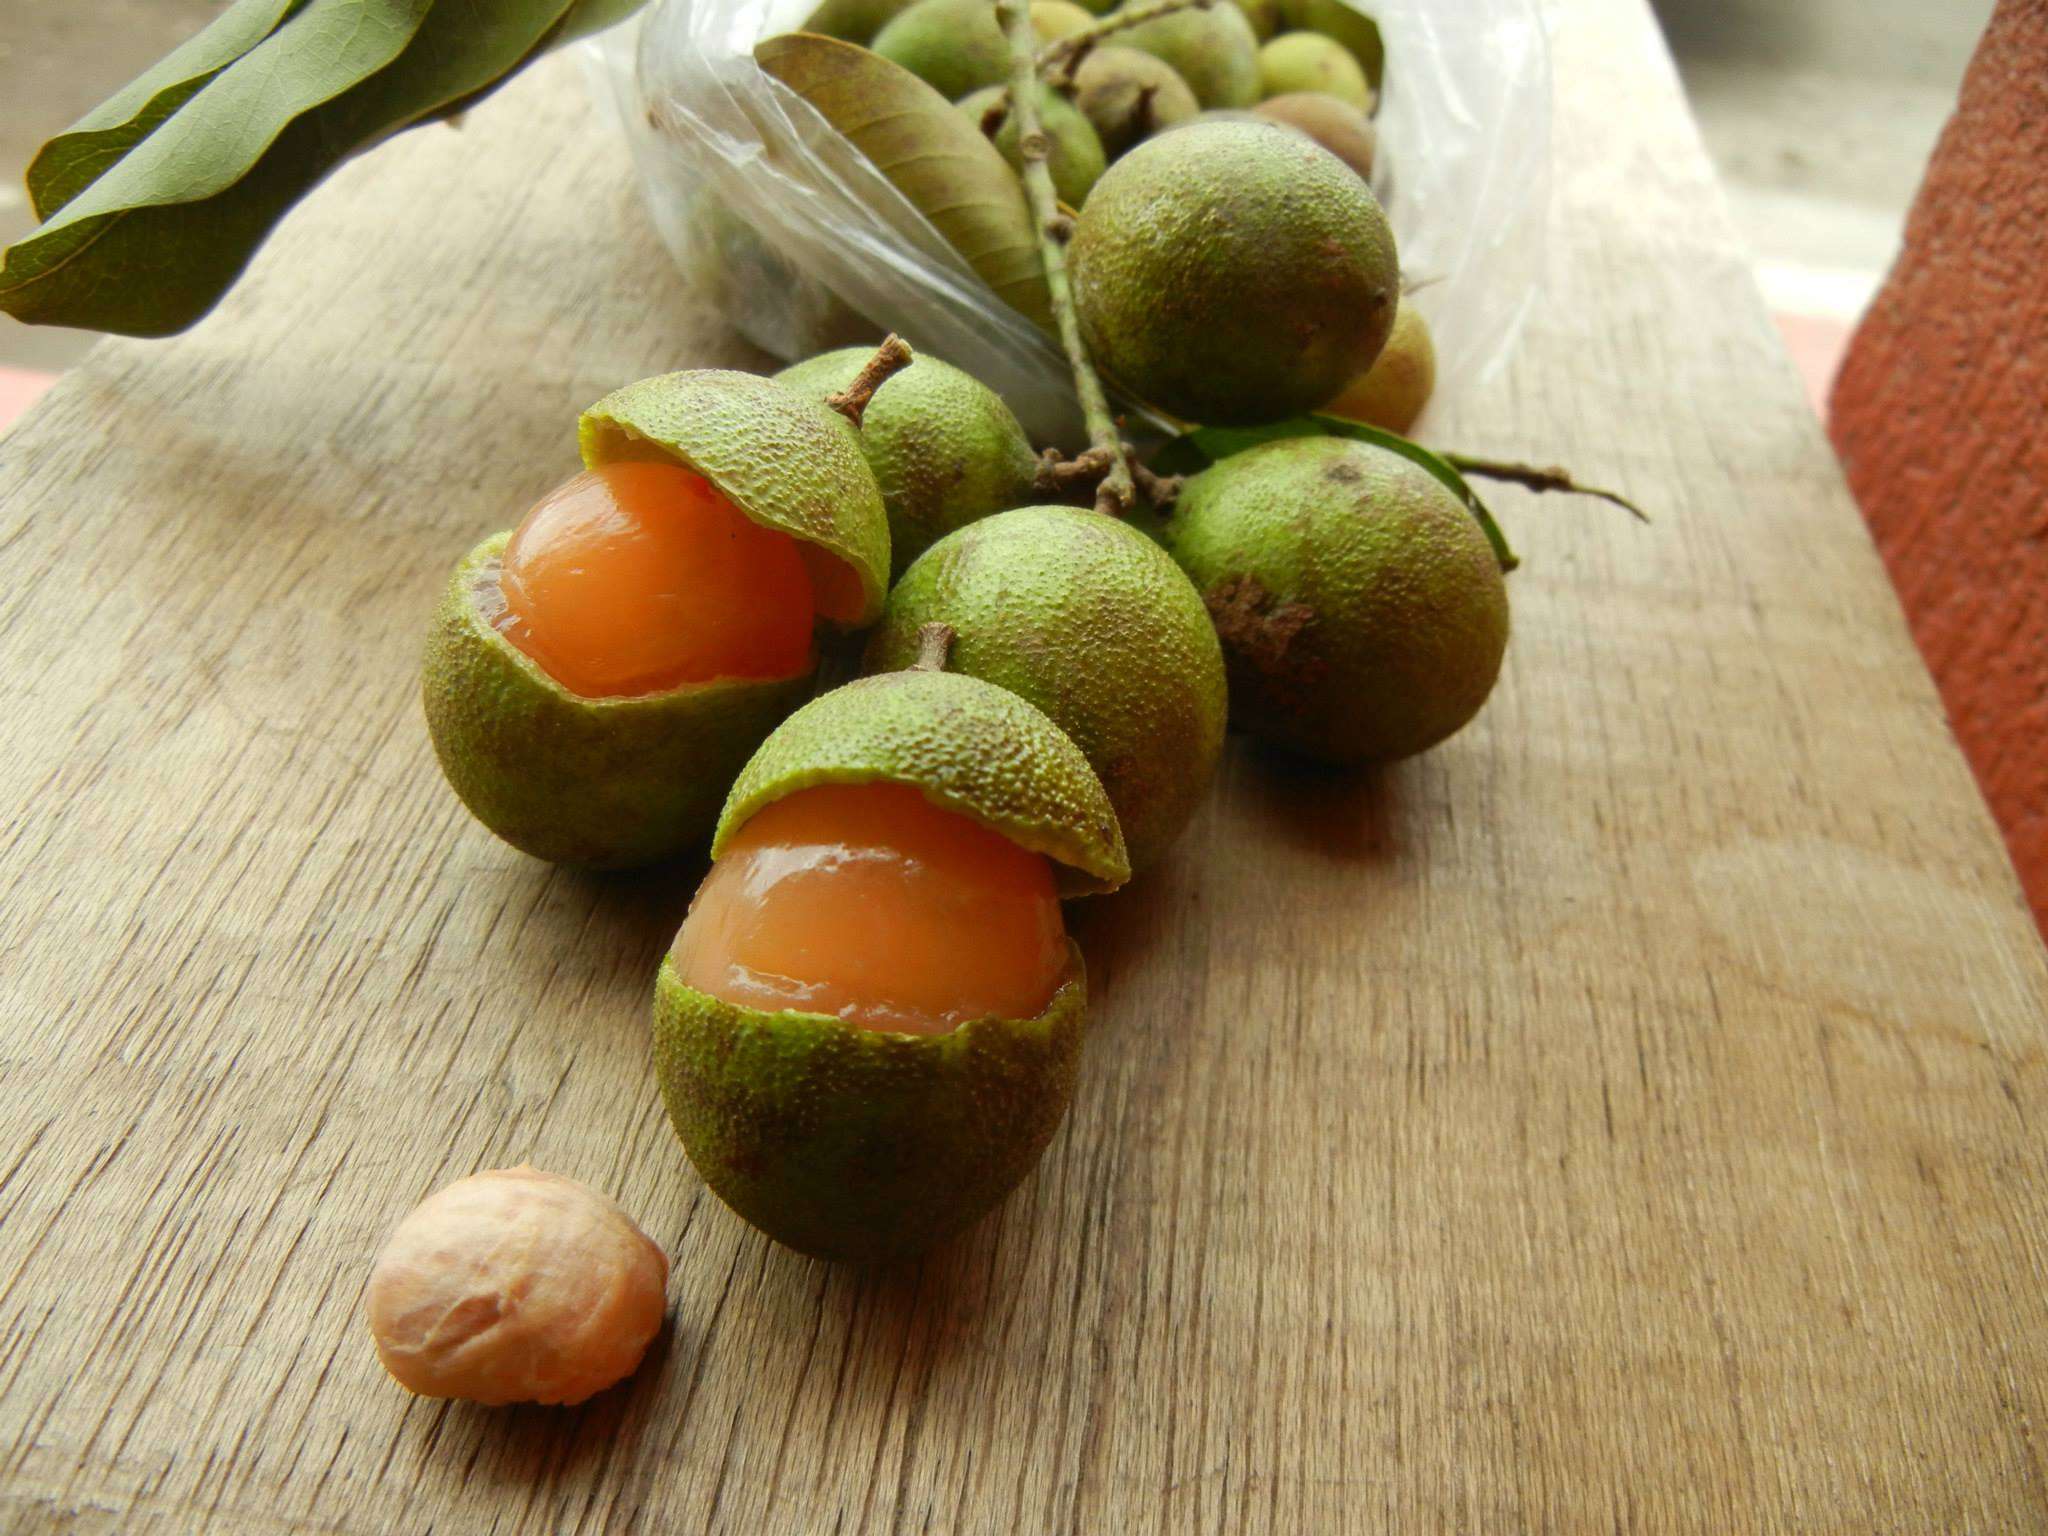 Limoncillos, a tarty fruit Pau and I had never heard of